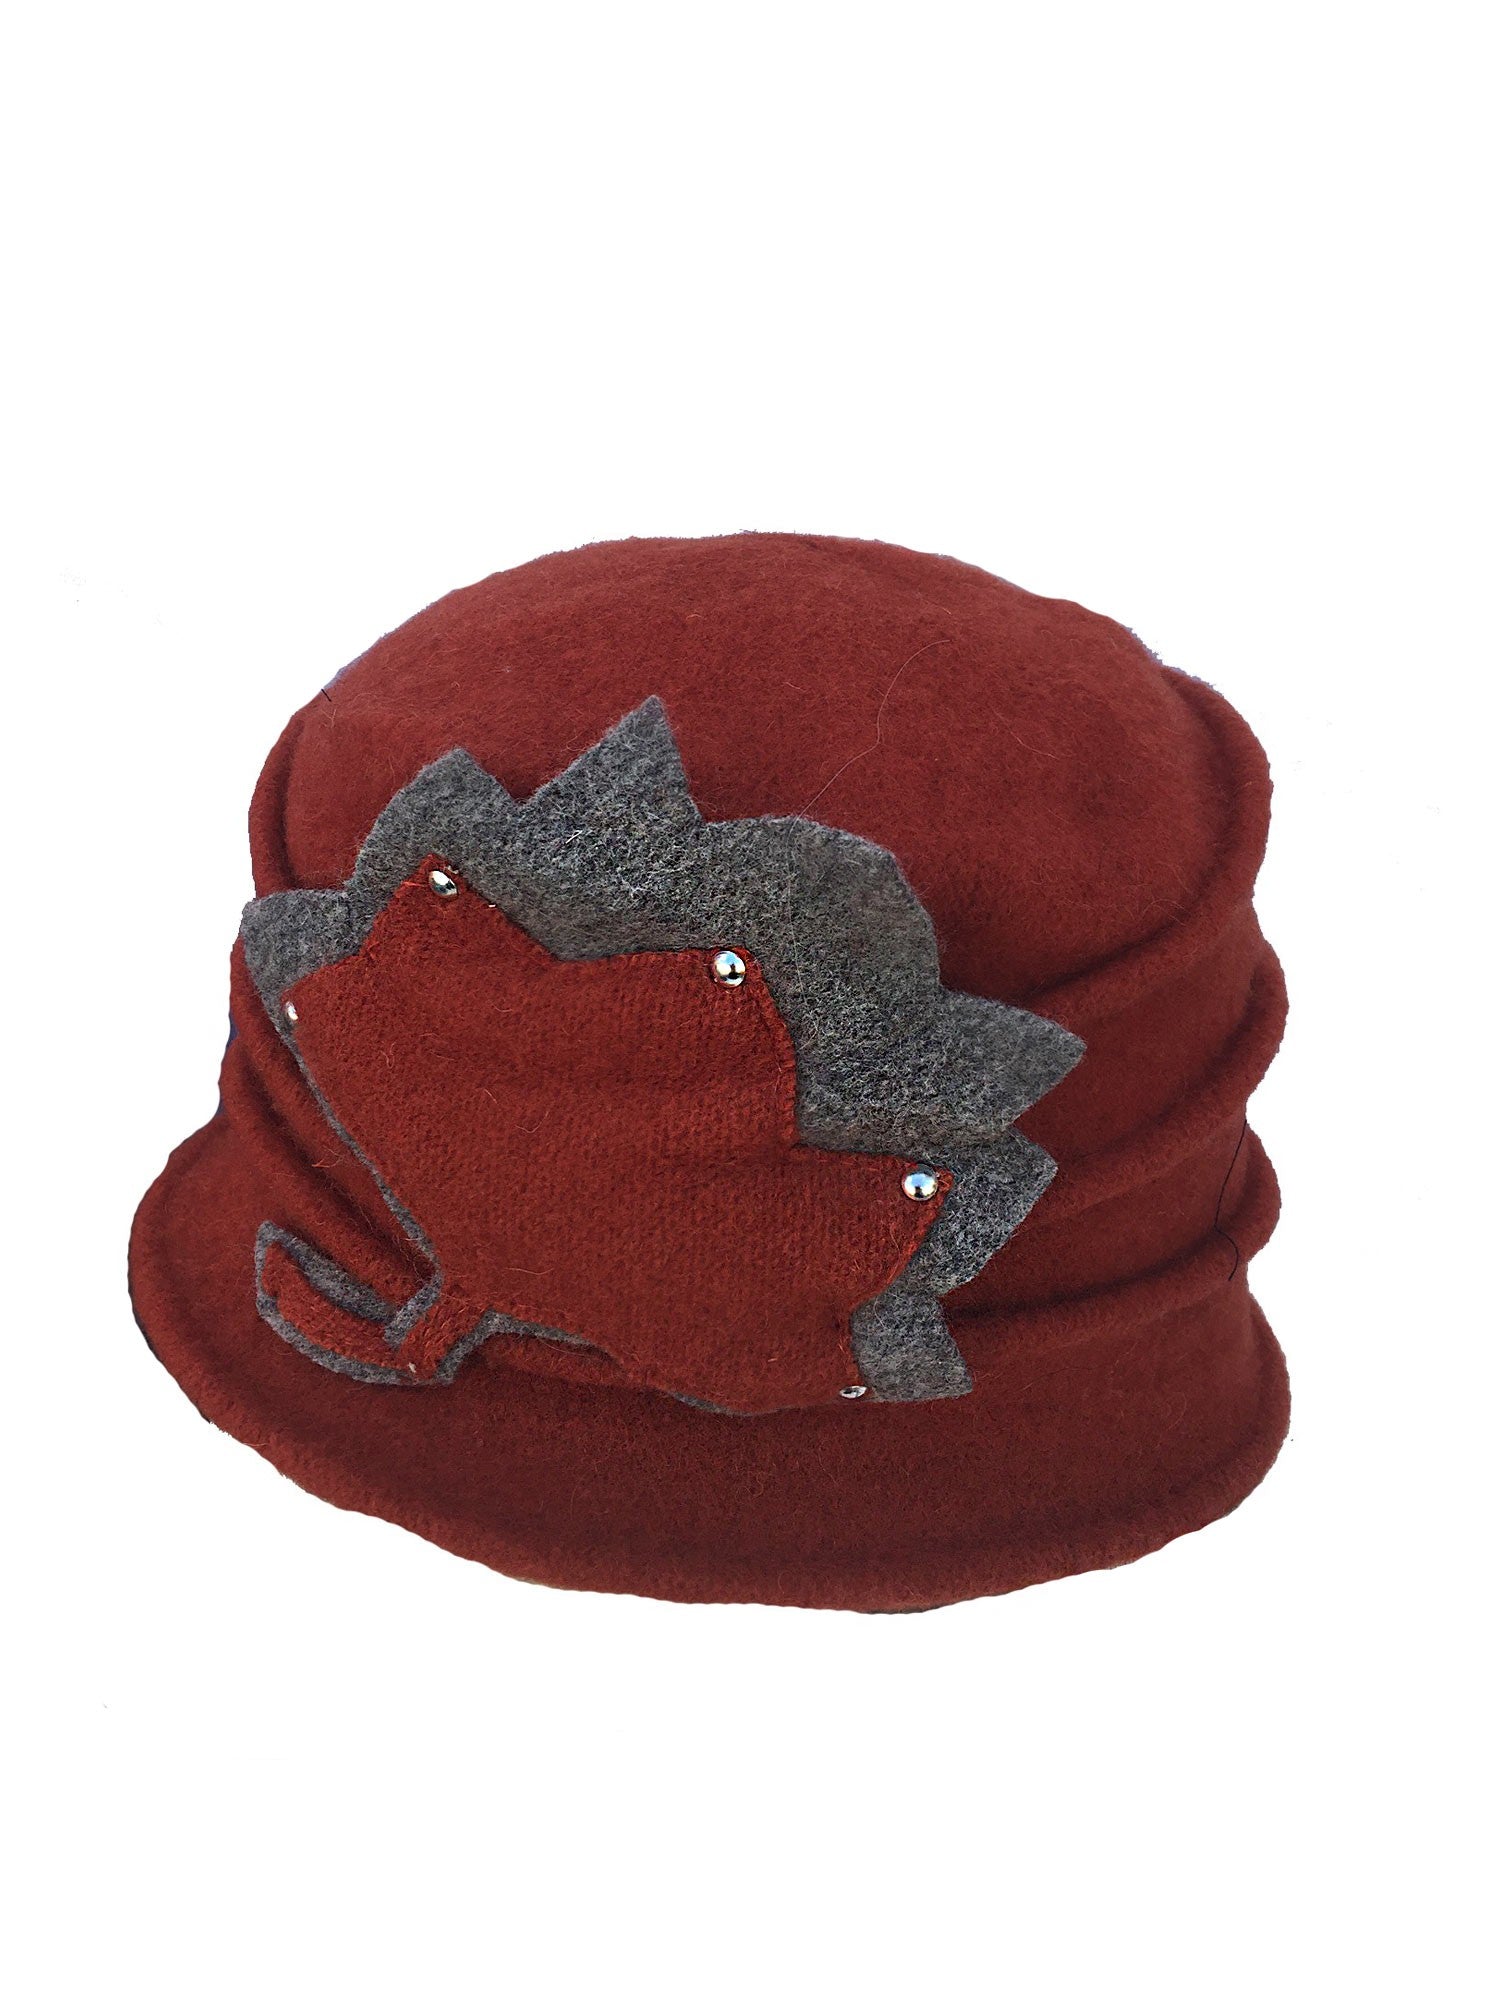 Cloche Hats for Ladies, Cloche hat for women, Cloche hats 1920s, Vintage ladies hats, Women's hats in the 1920s, Black cloche hat, Red cloche hat